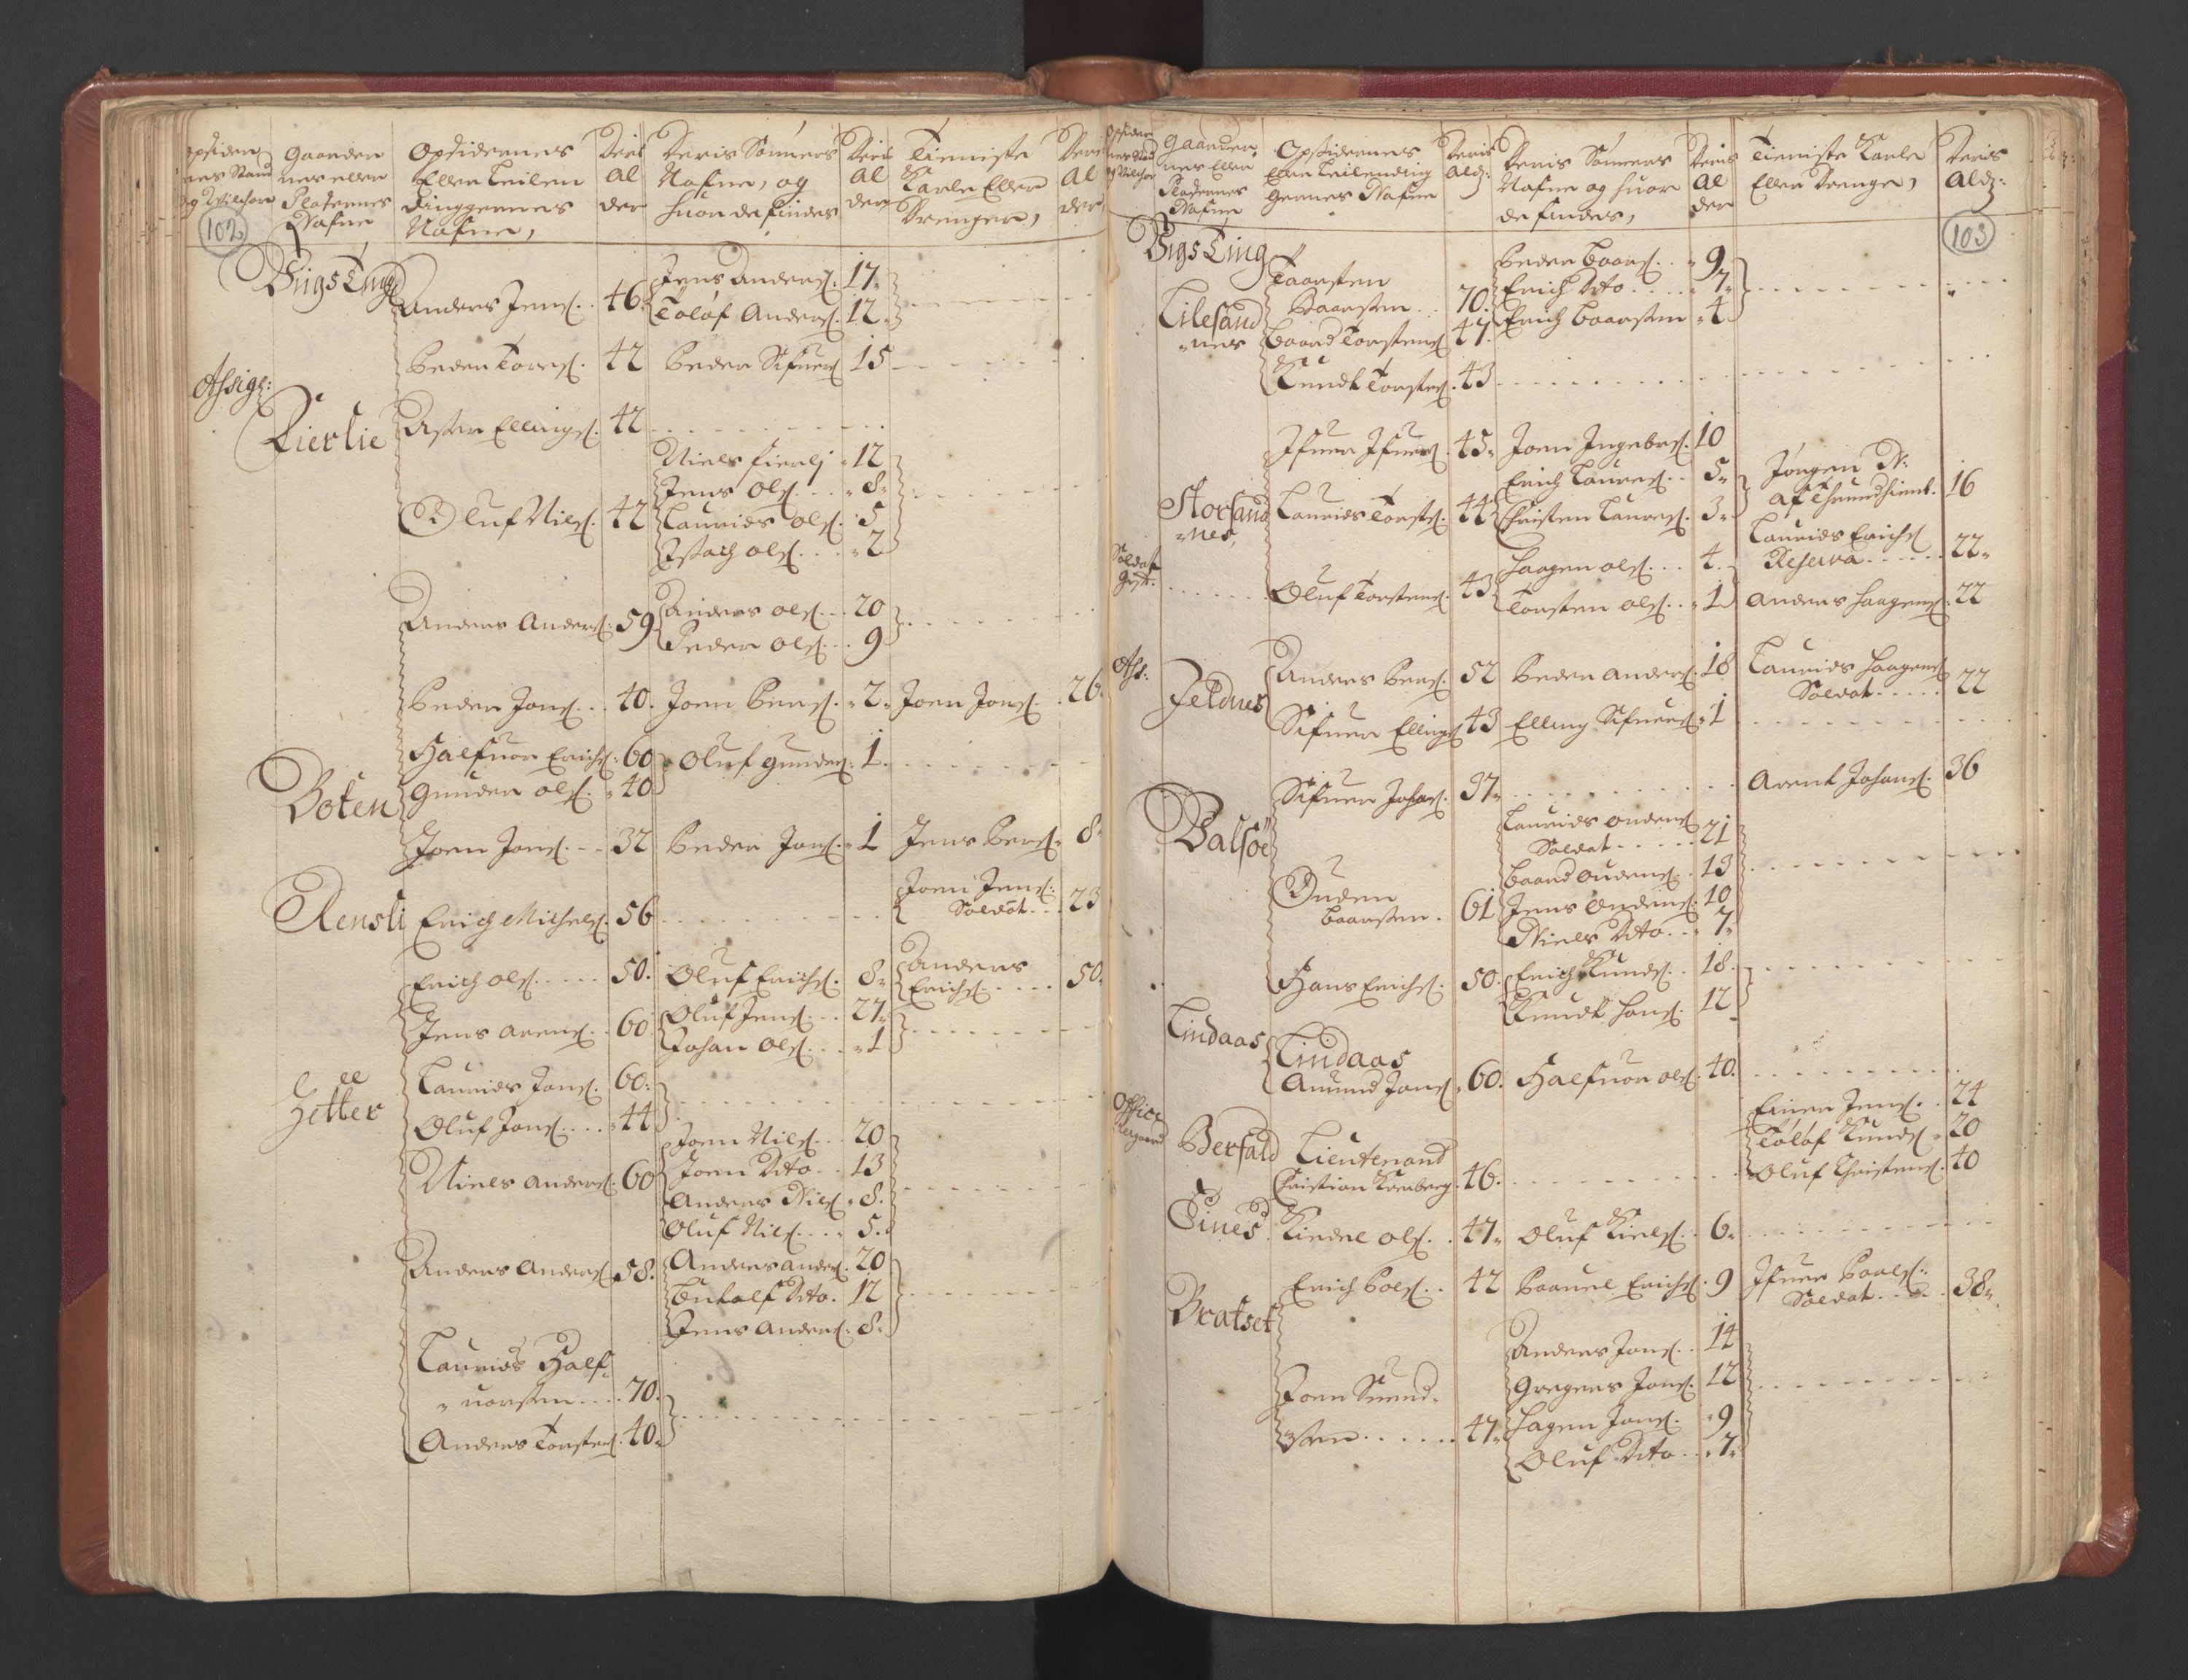 RA, Manntallet 1701, nr. 11: Nordmøre fogderi og Romsdal fogderi, 1701, s. 102-103